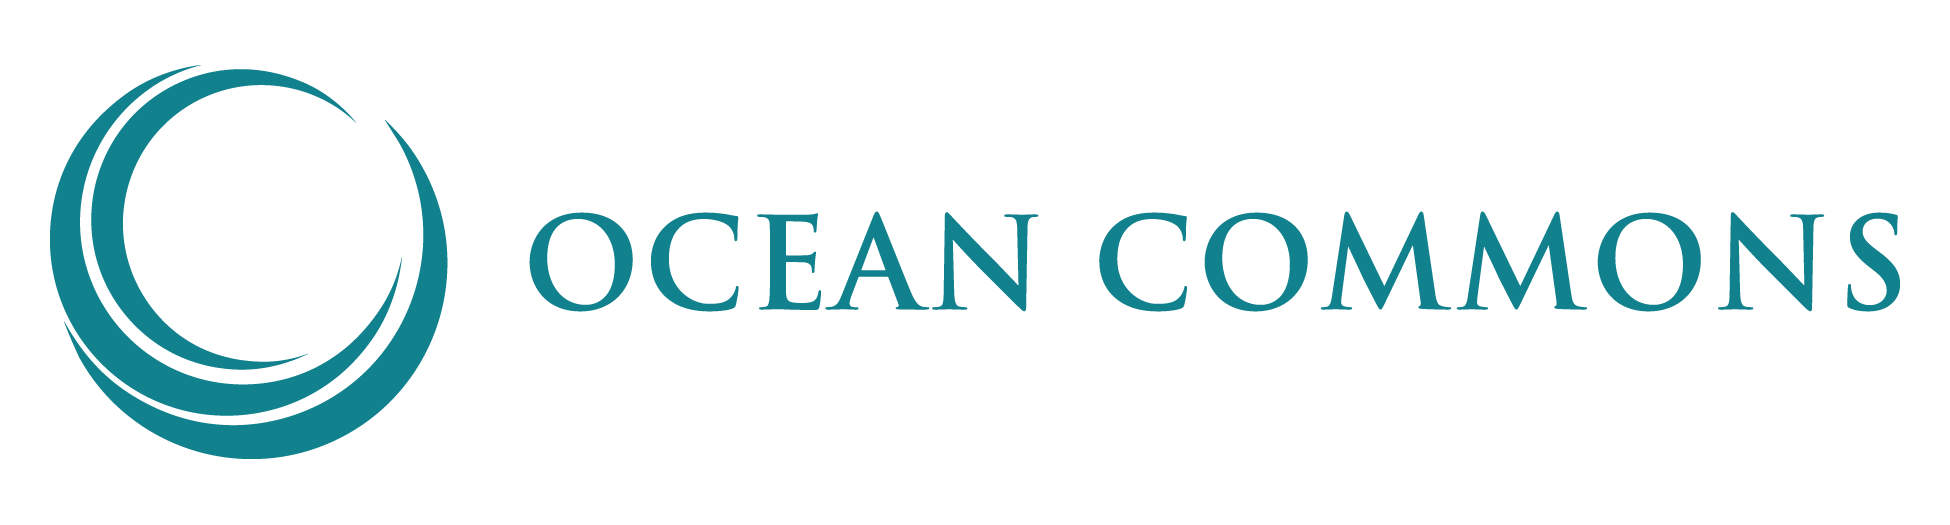 Ocean Commons